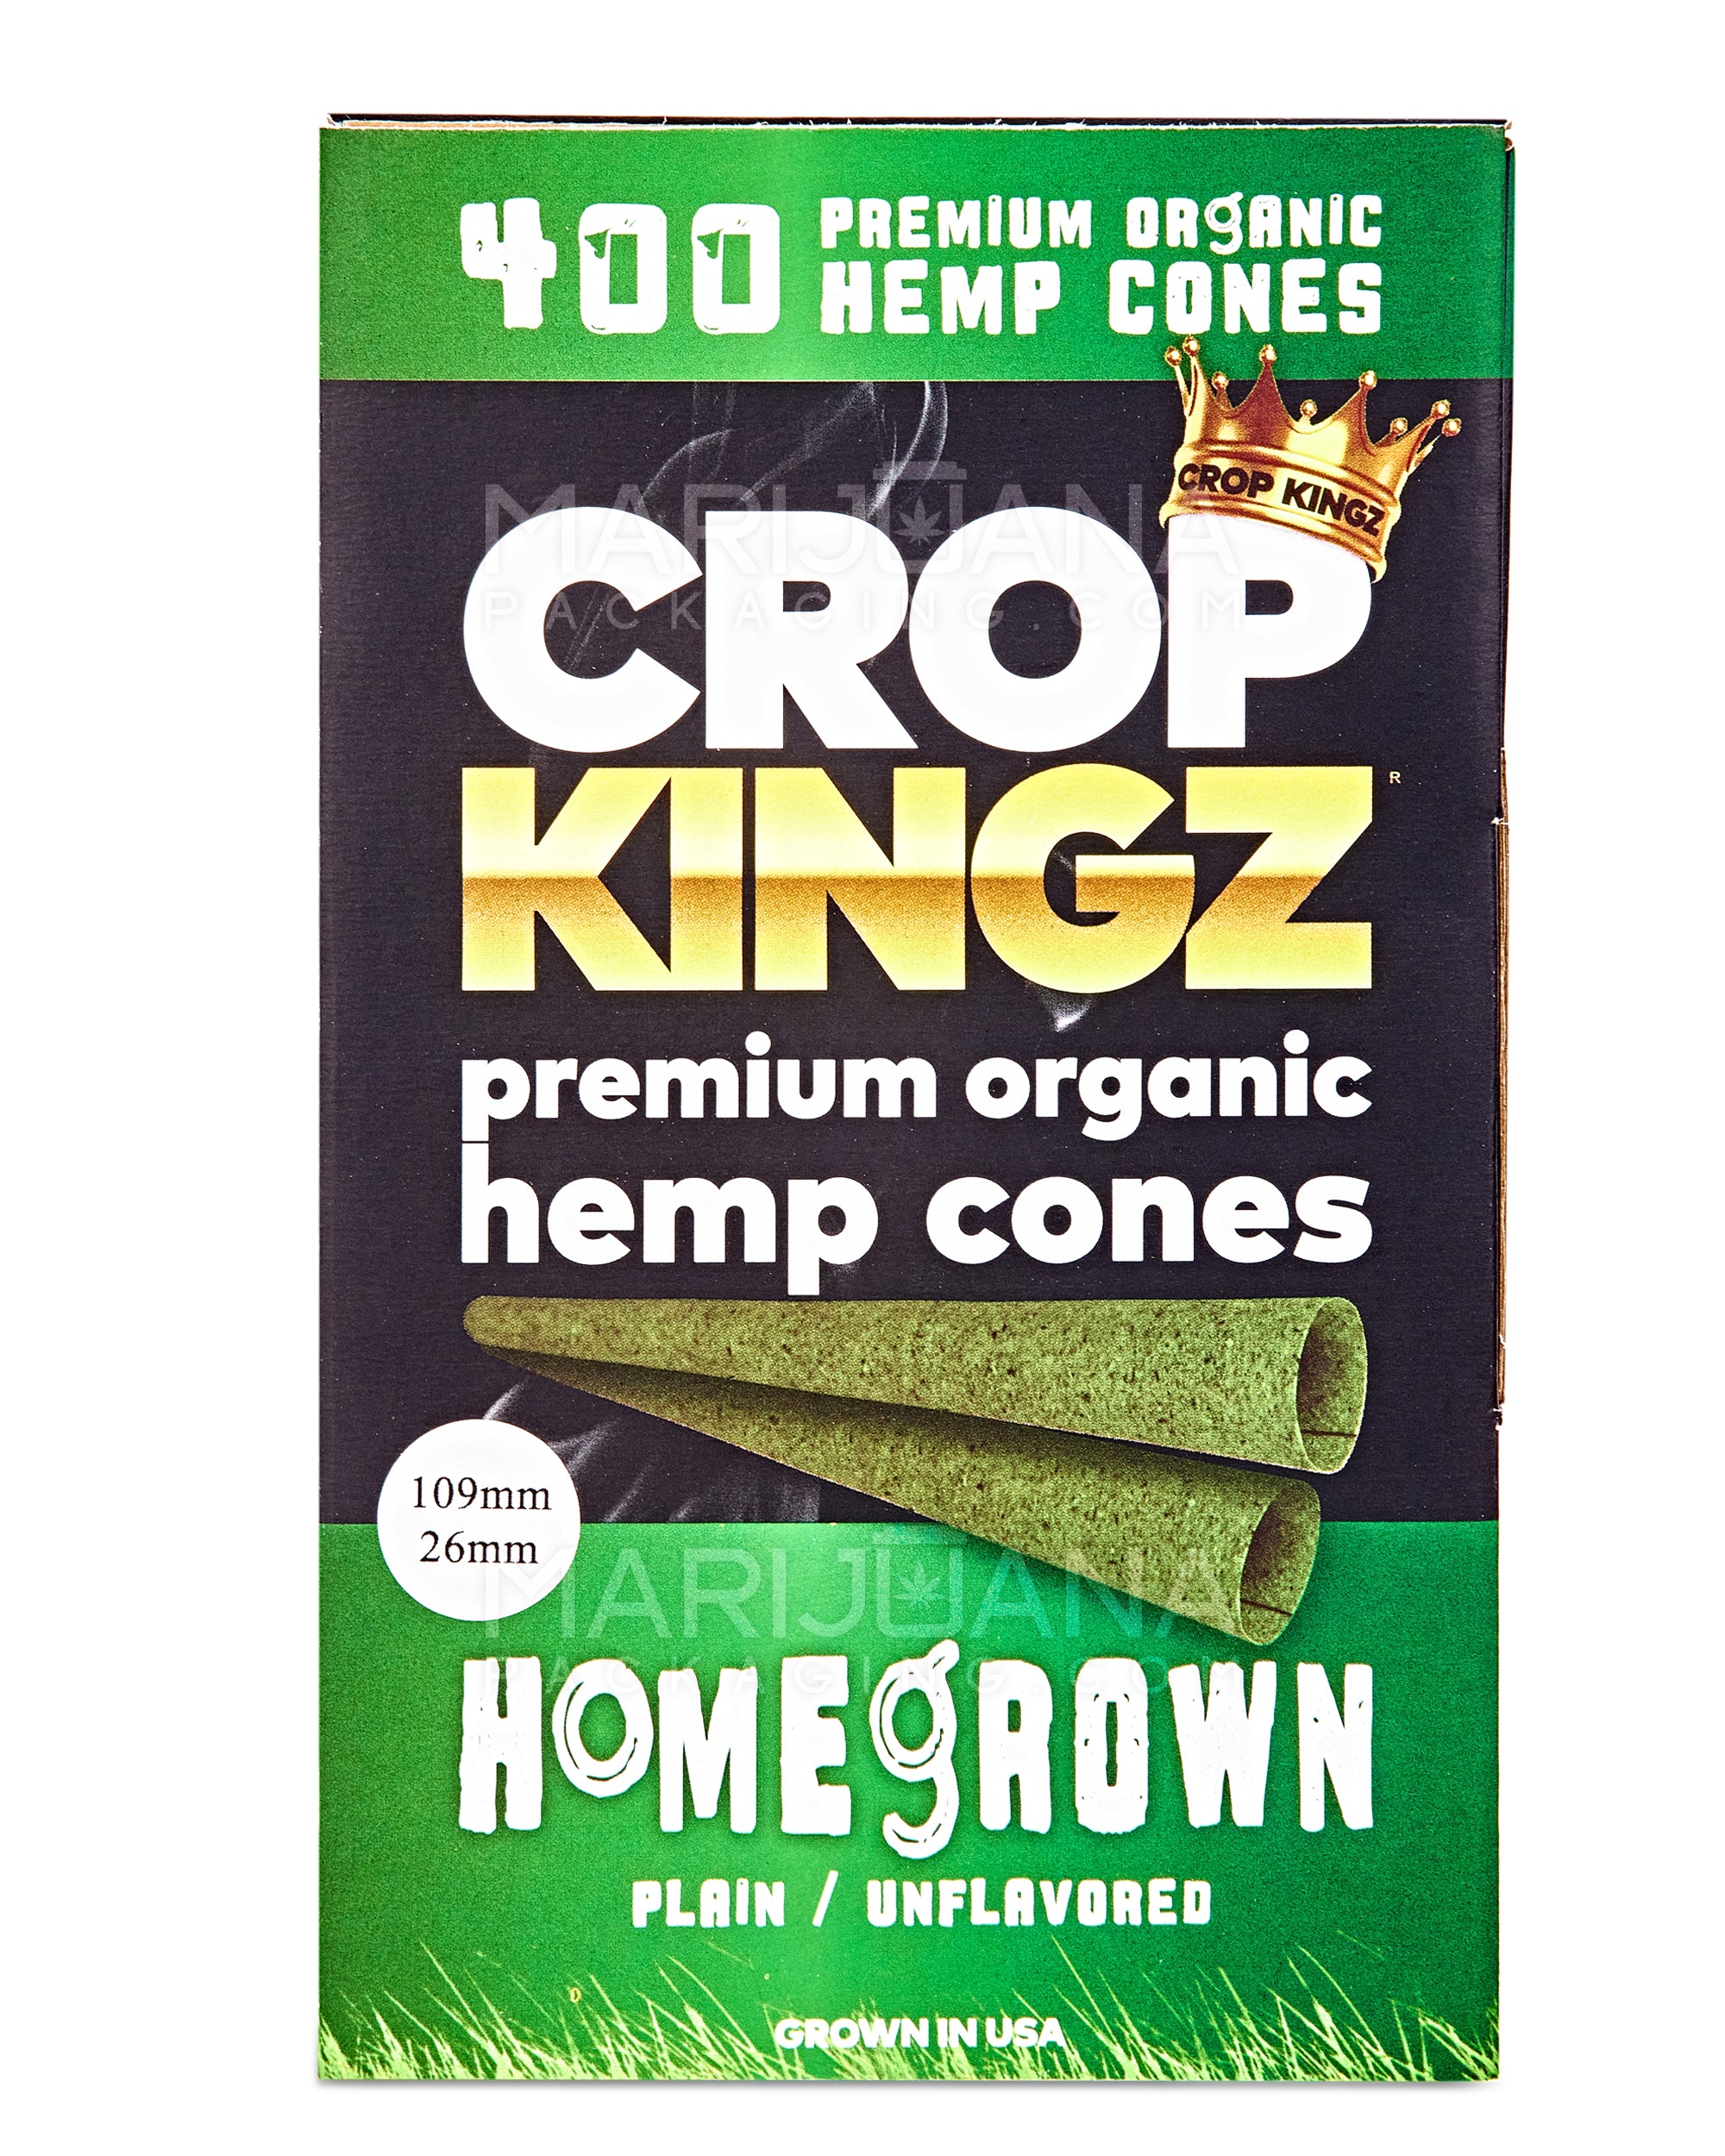 CROP KINGZ | King Size Premium Organic Hemp Cones | 109mm - Hemp Paper - 400 Count - 5